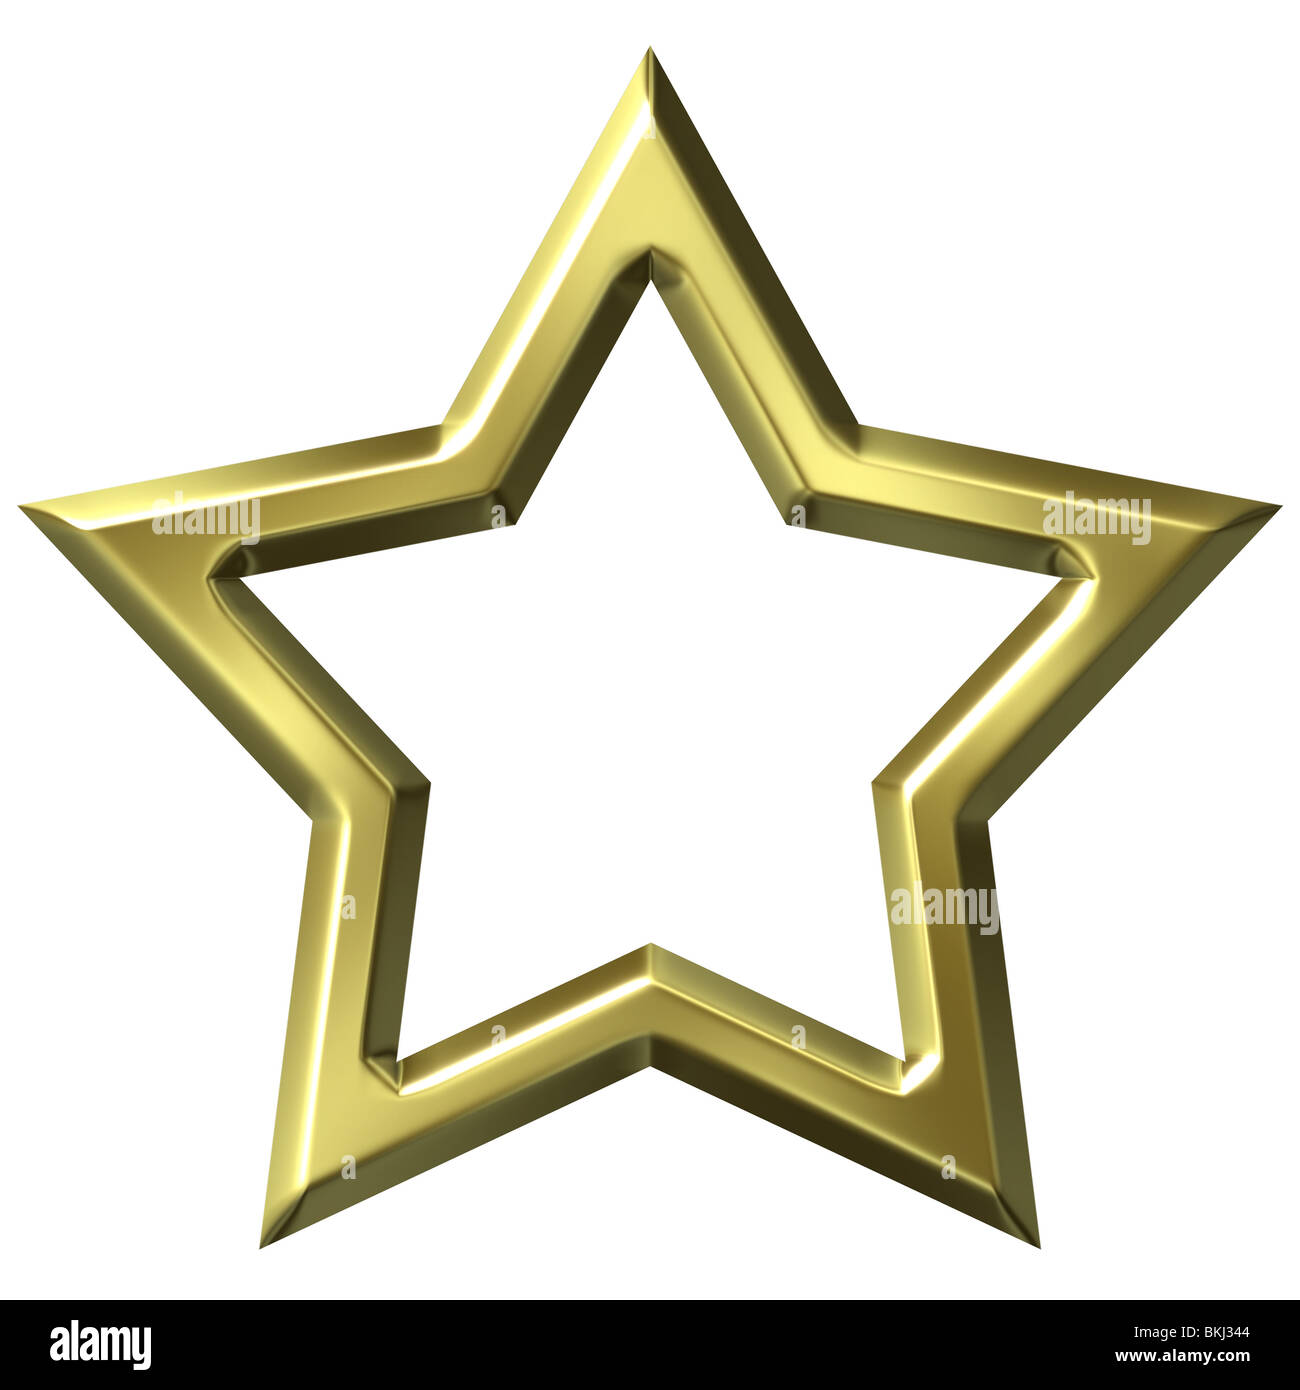 Gold Star Stamper - SuperStickers